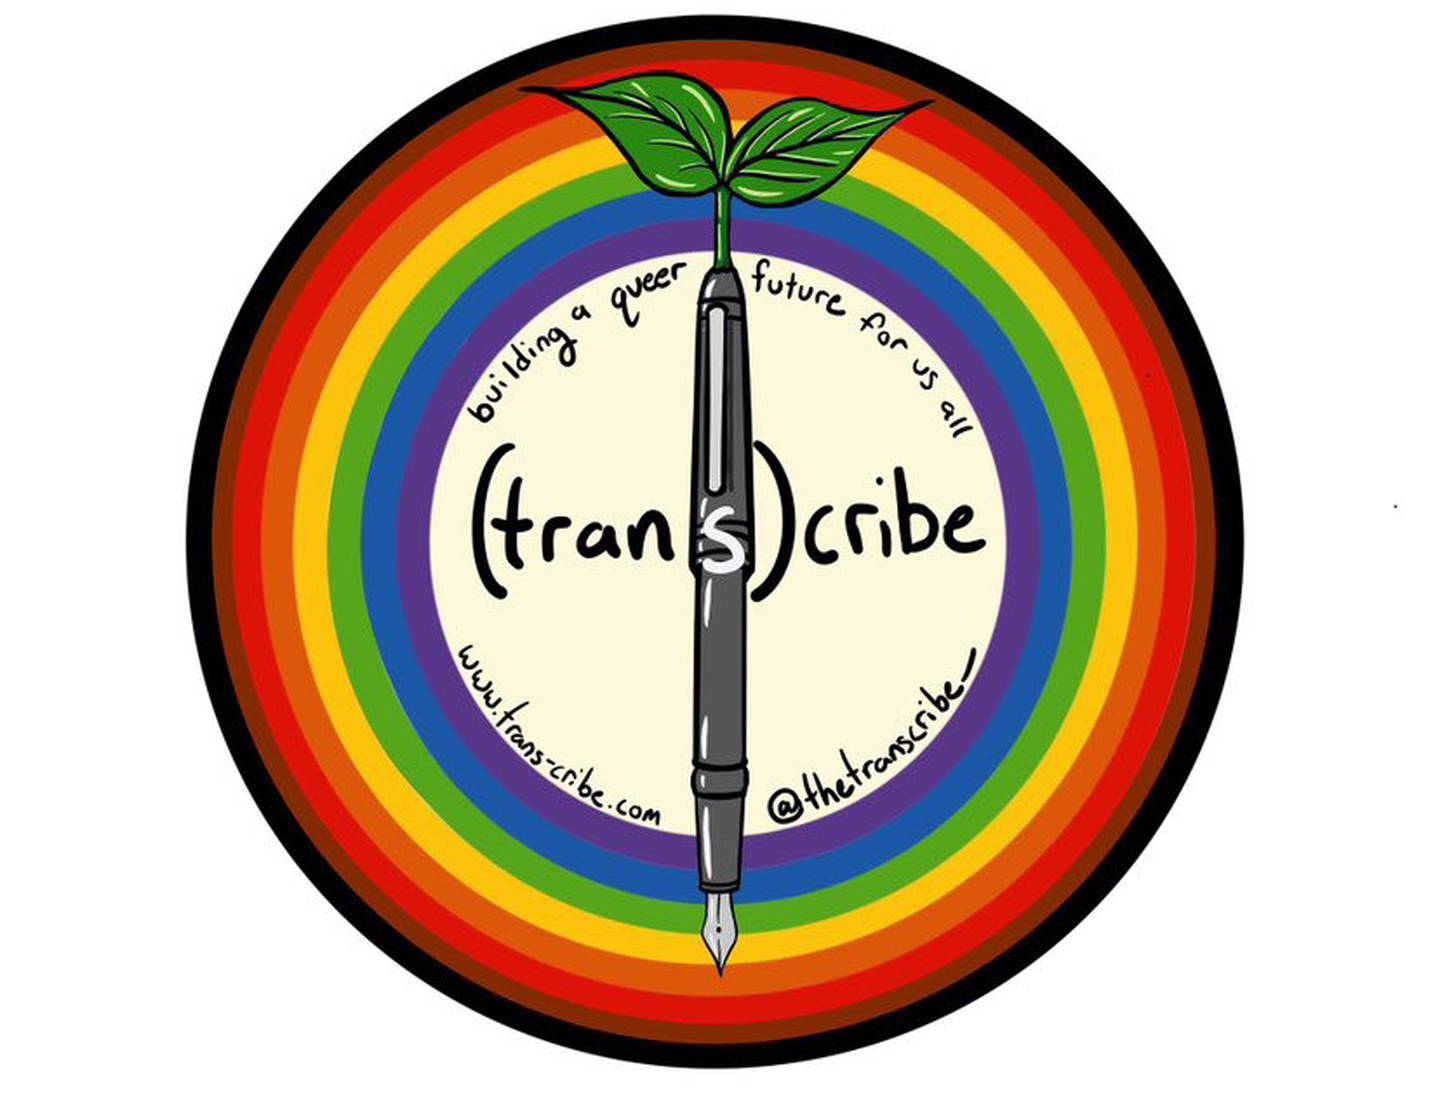 "Transcribe," Wynter Appleford's business logo